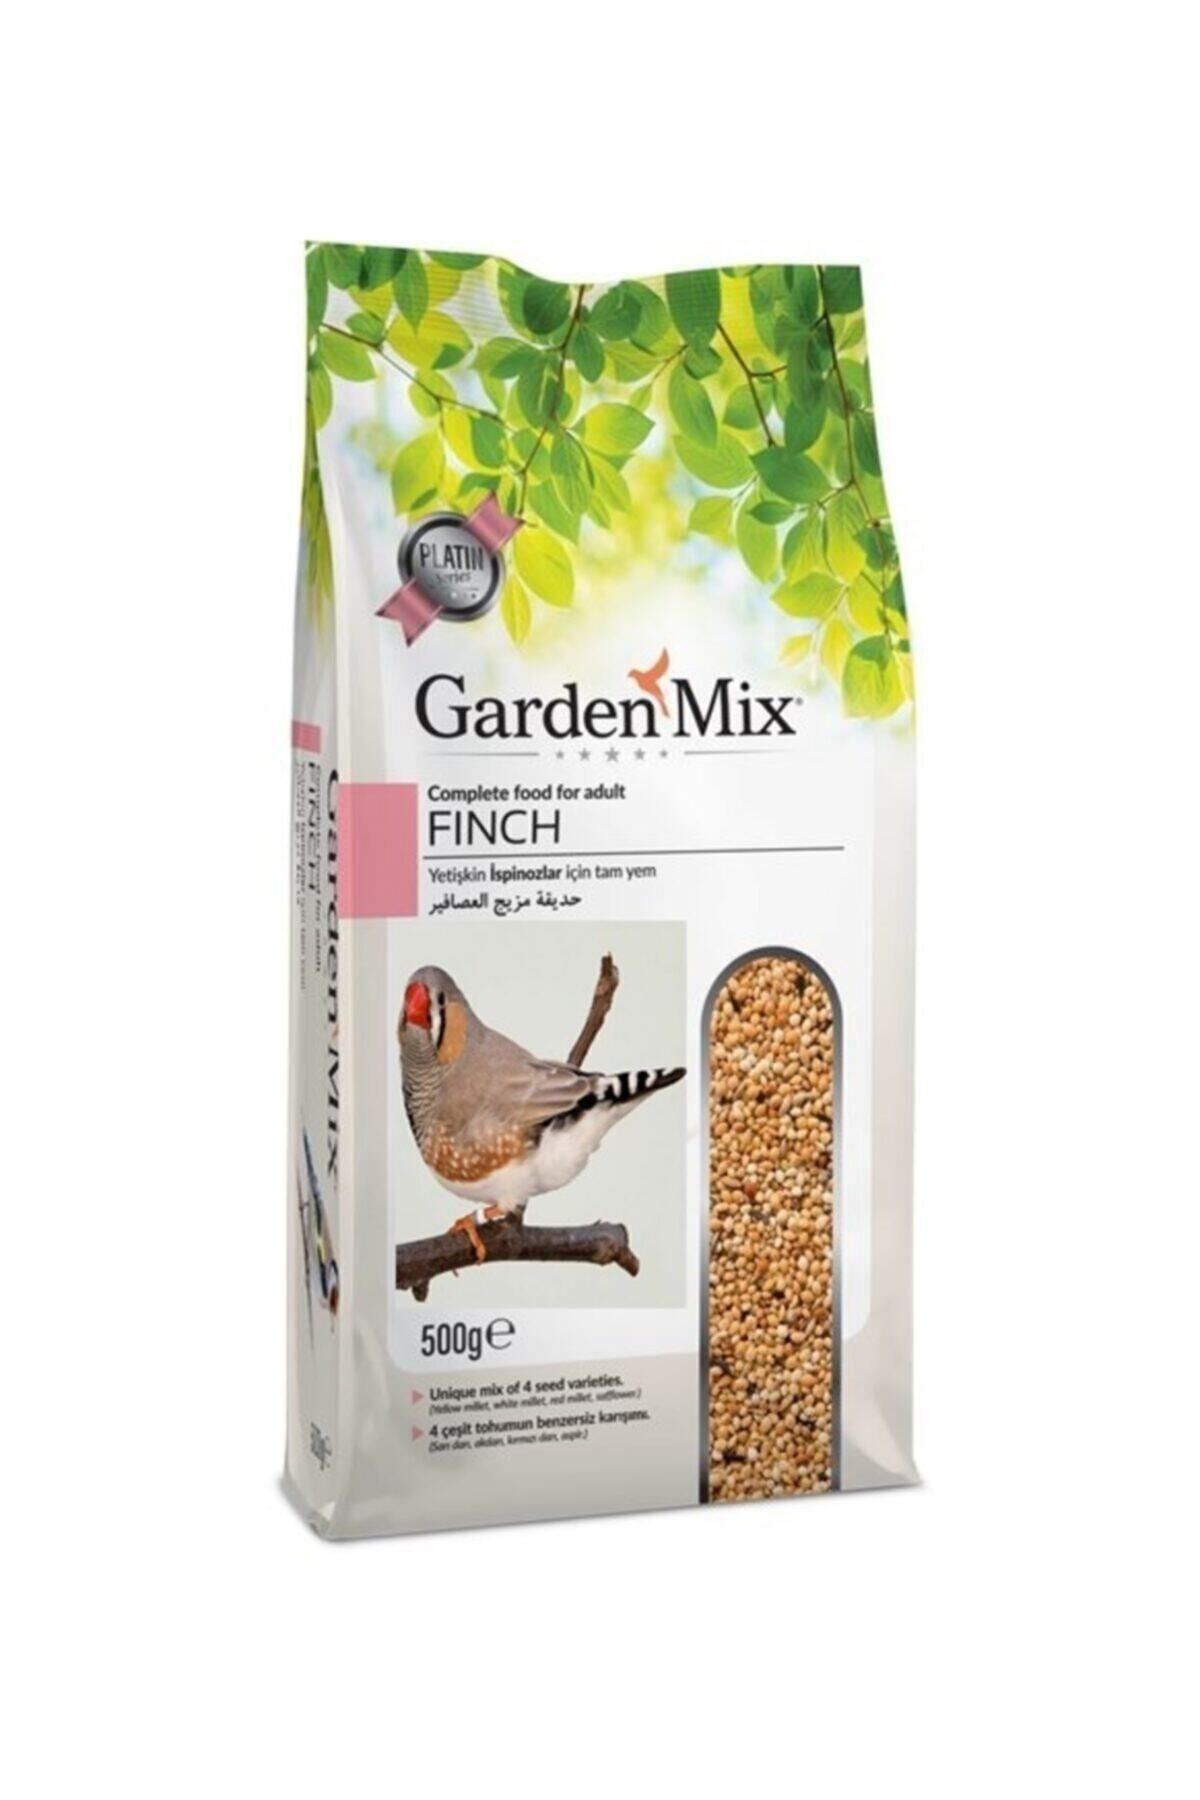 Takaz Global Gardenmix Platin Series Finches Hint Bülbülü Yemi 500gr fincis